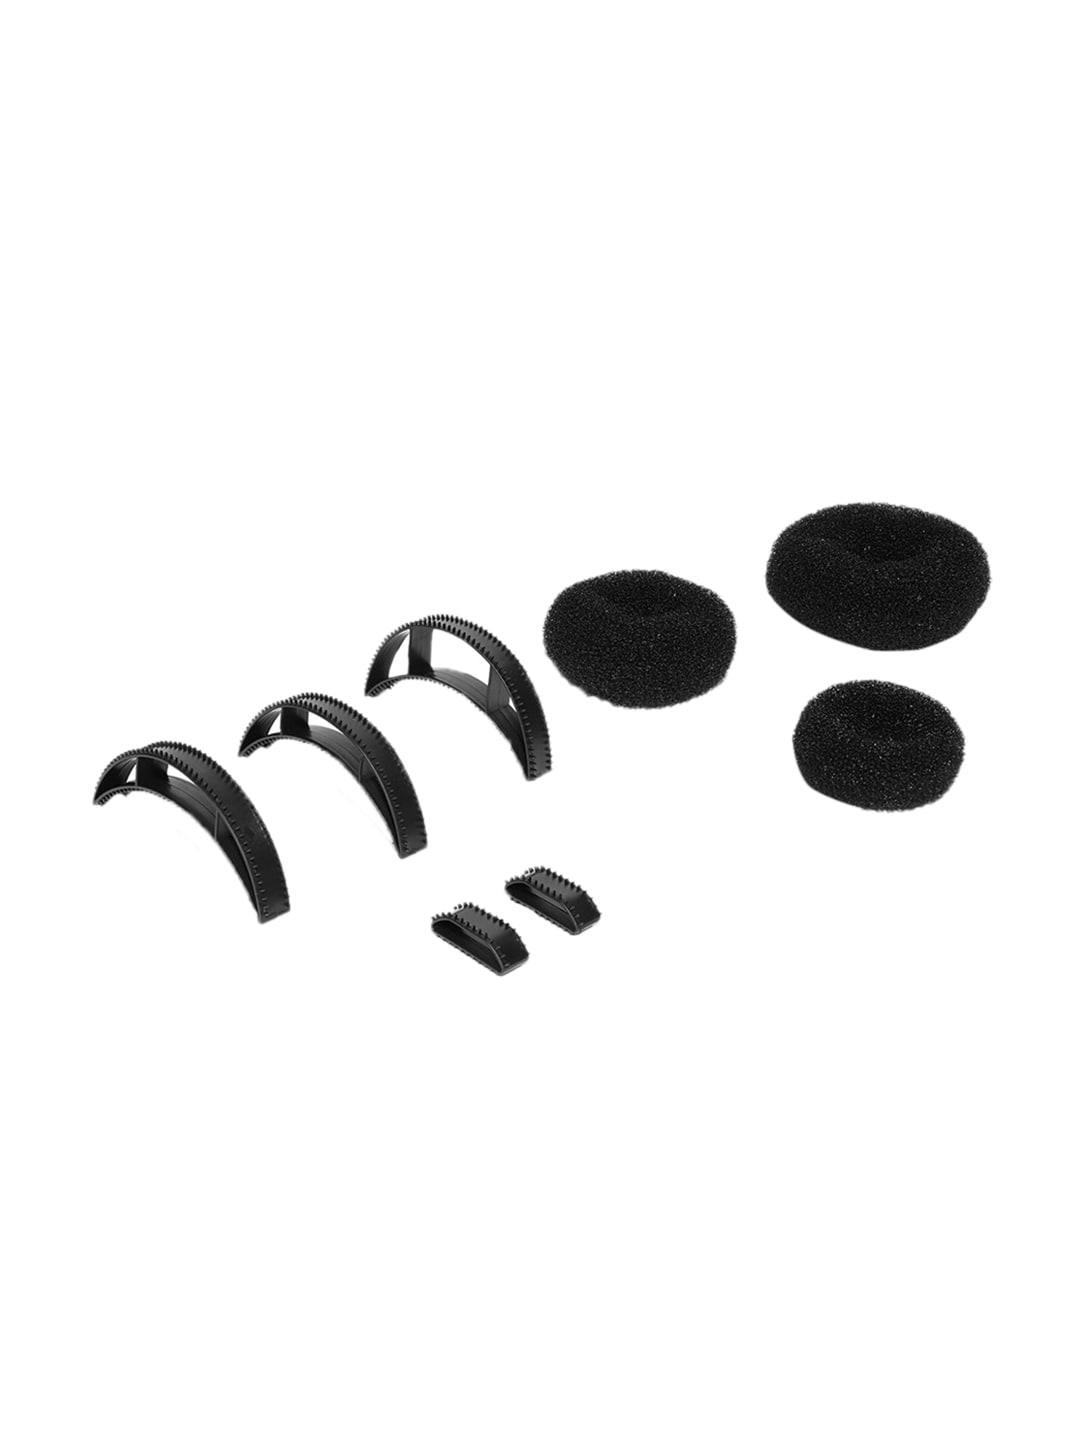 CHRONEX Set of 8 Black Party Hair Accessories Set